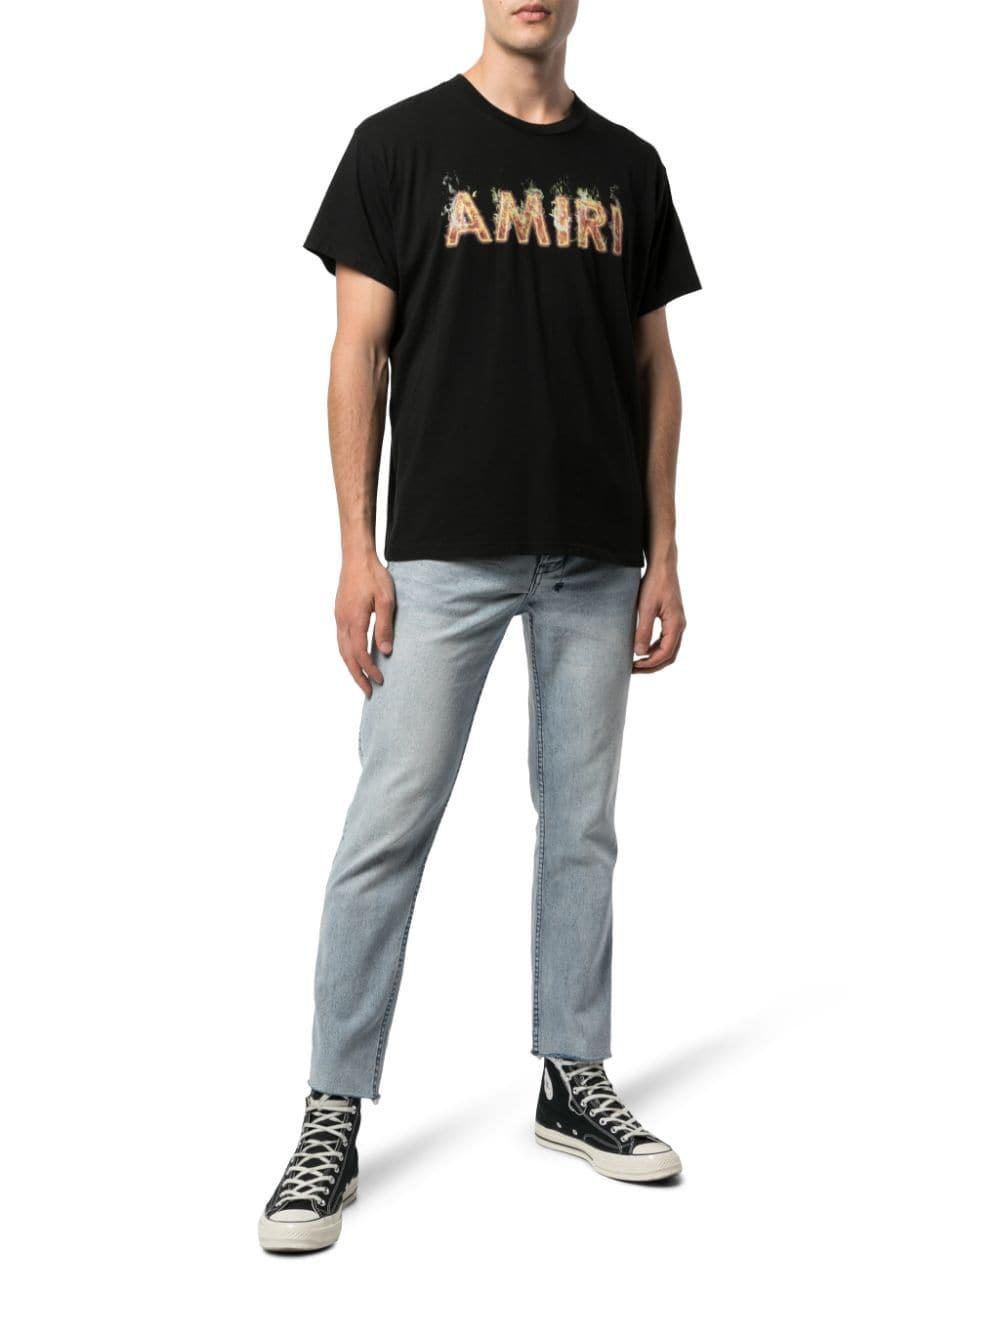 Amiri Logo T-shirt in Black for Men - Lyst